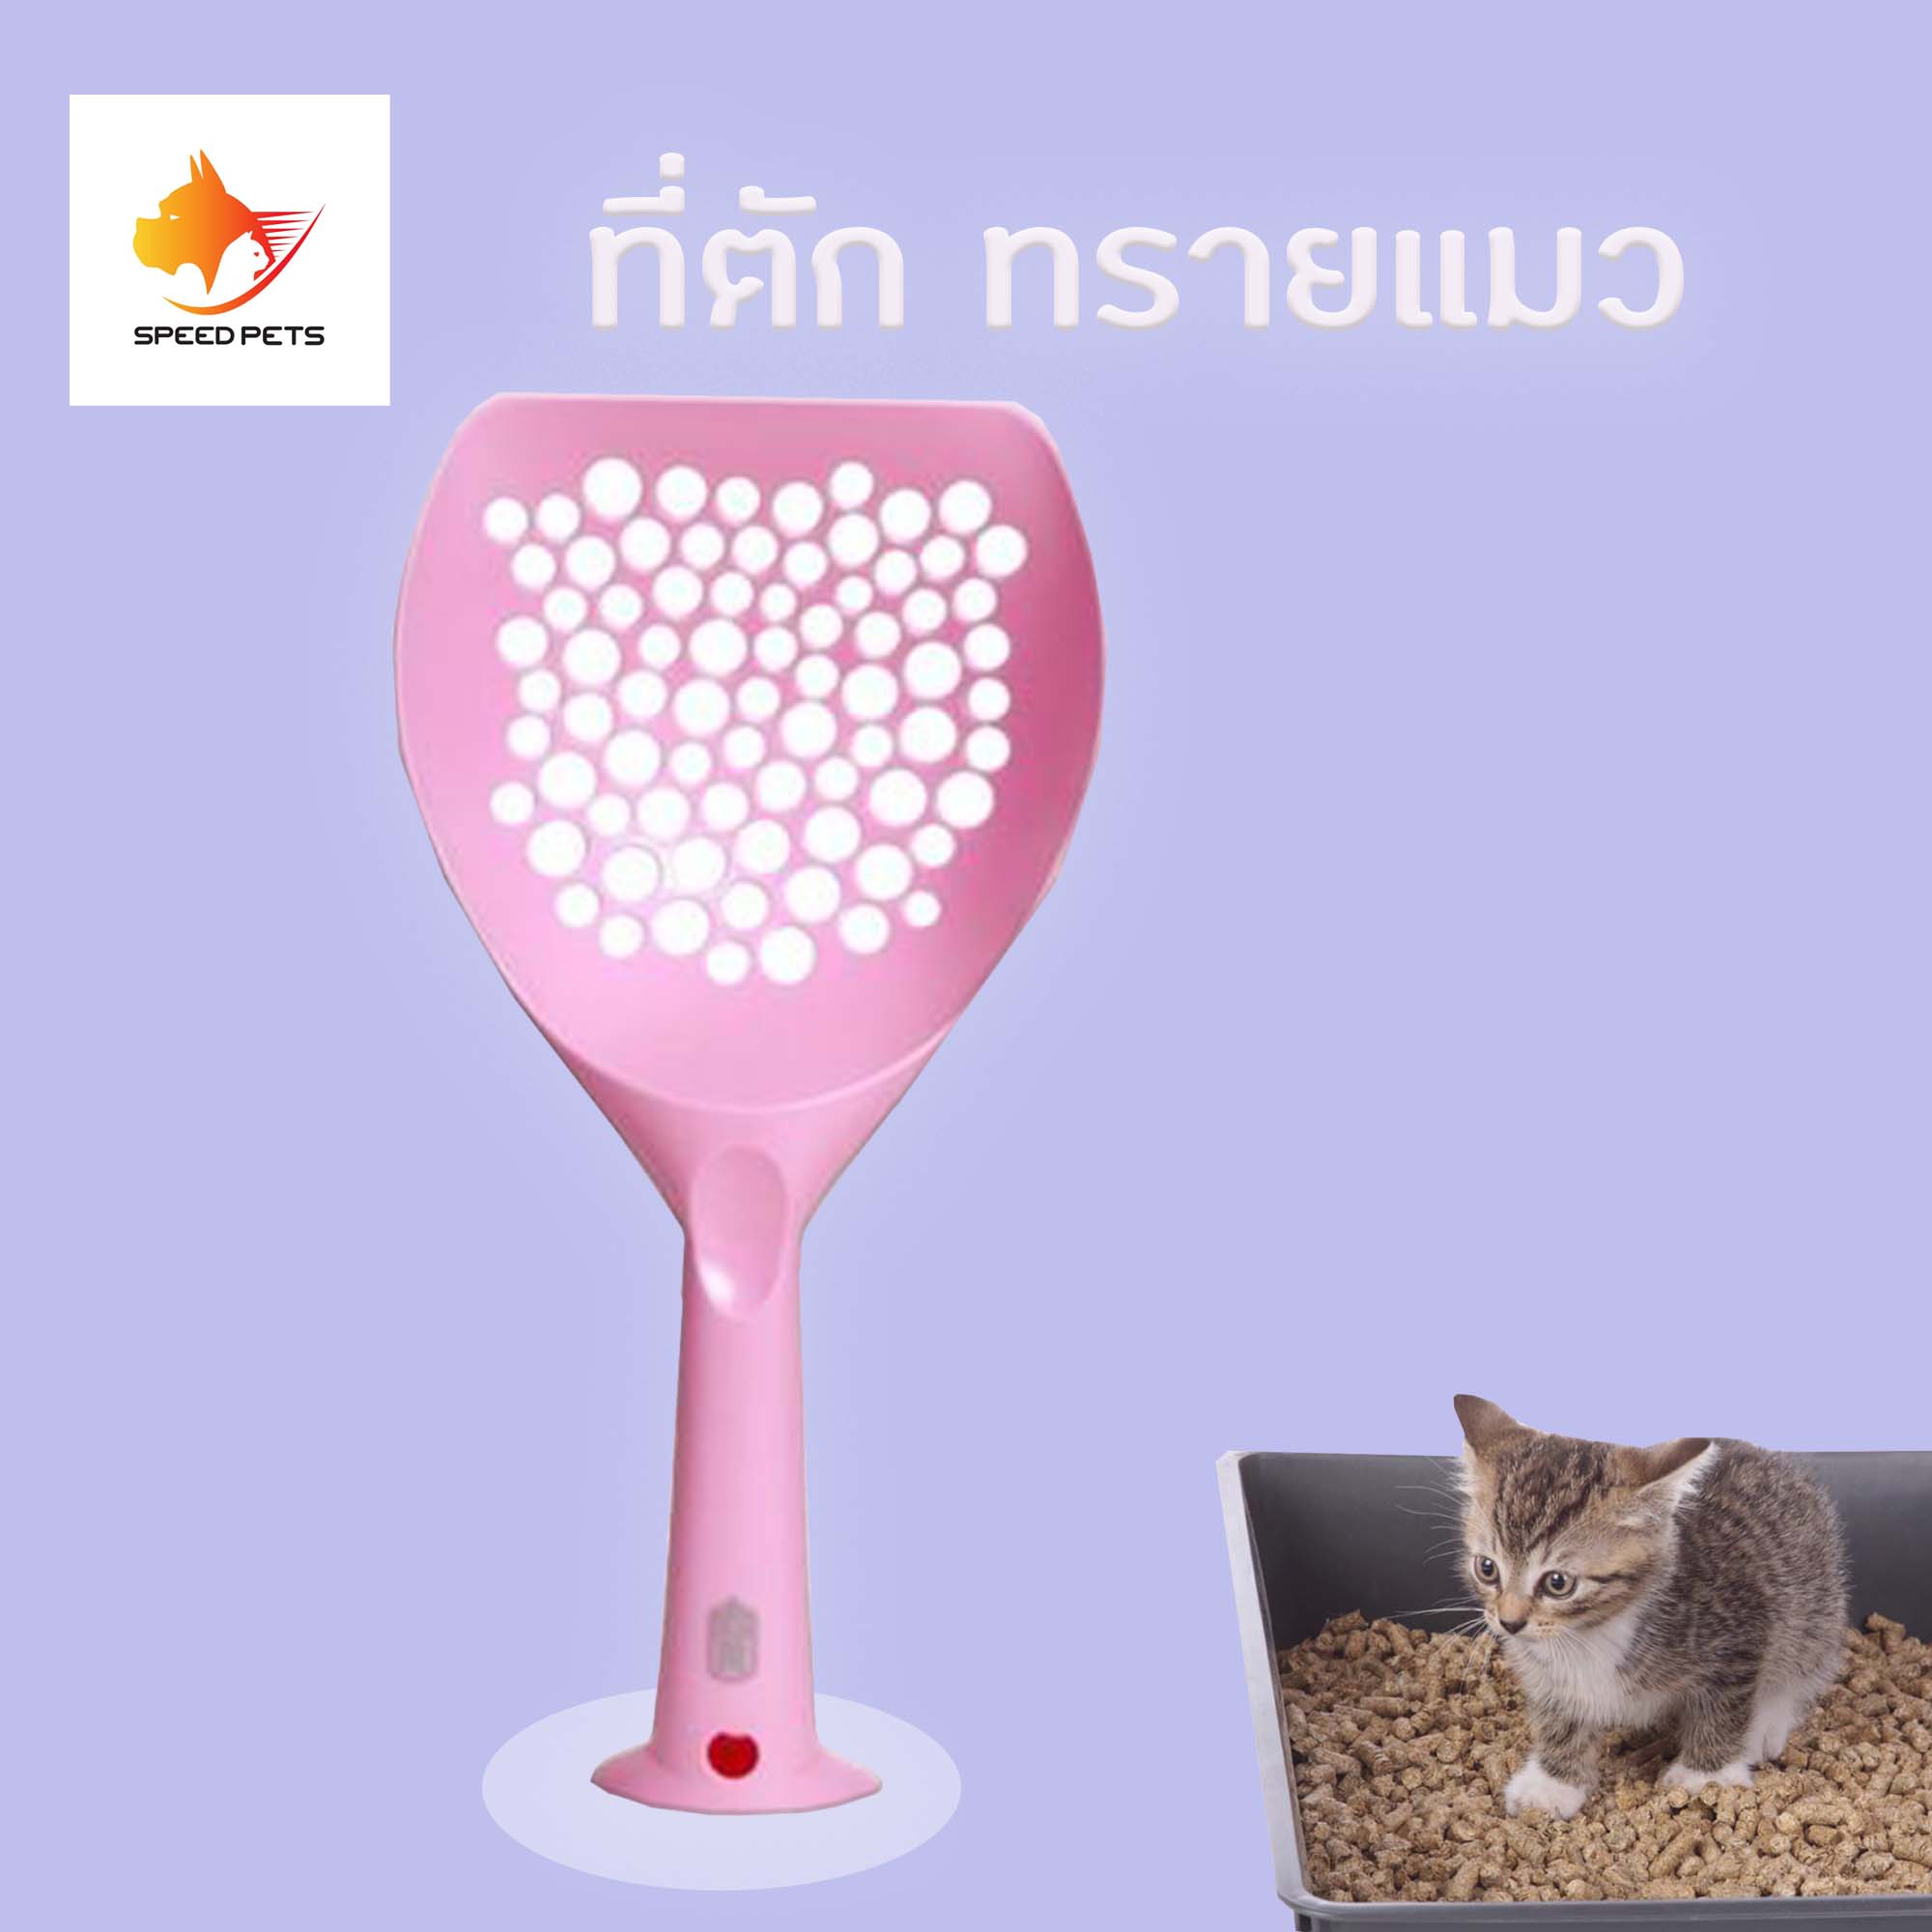 Pet8 Cat Litter Spoon ที่ตัก ทรายแมว จำนวน 1 อัน